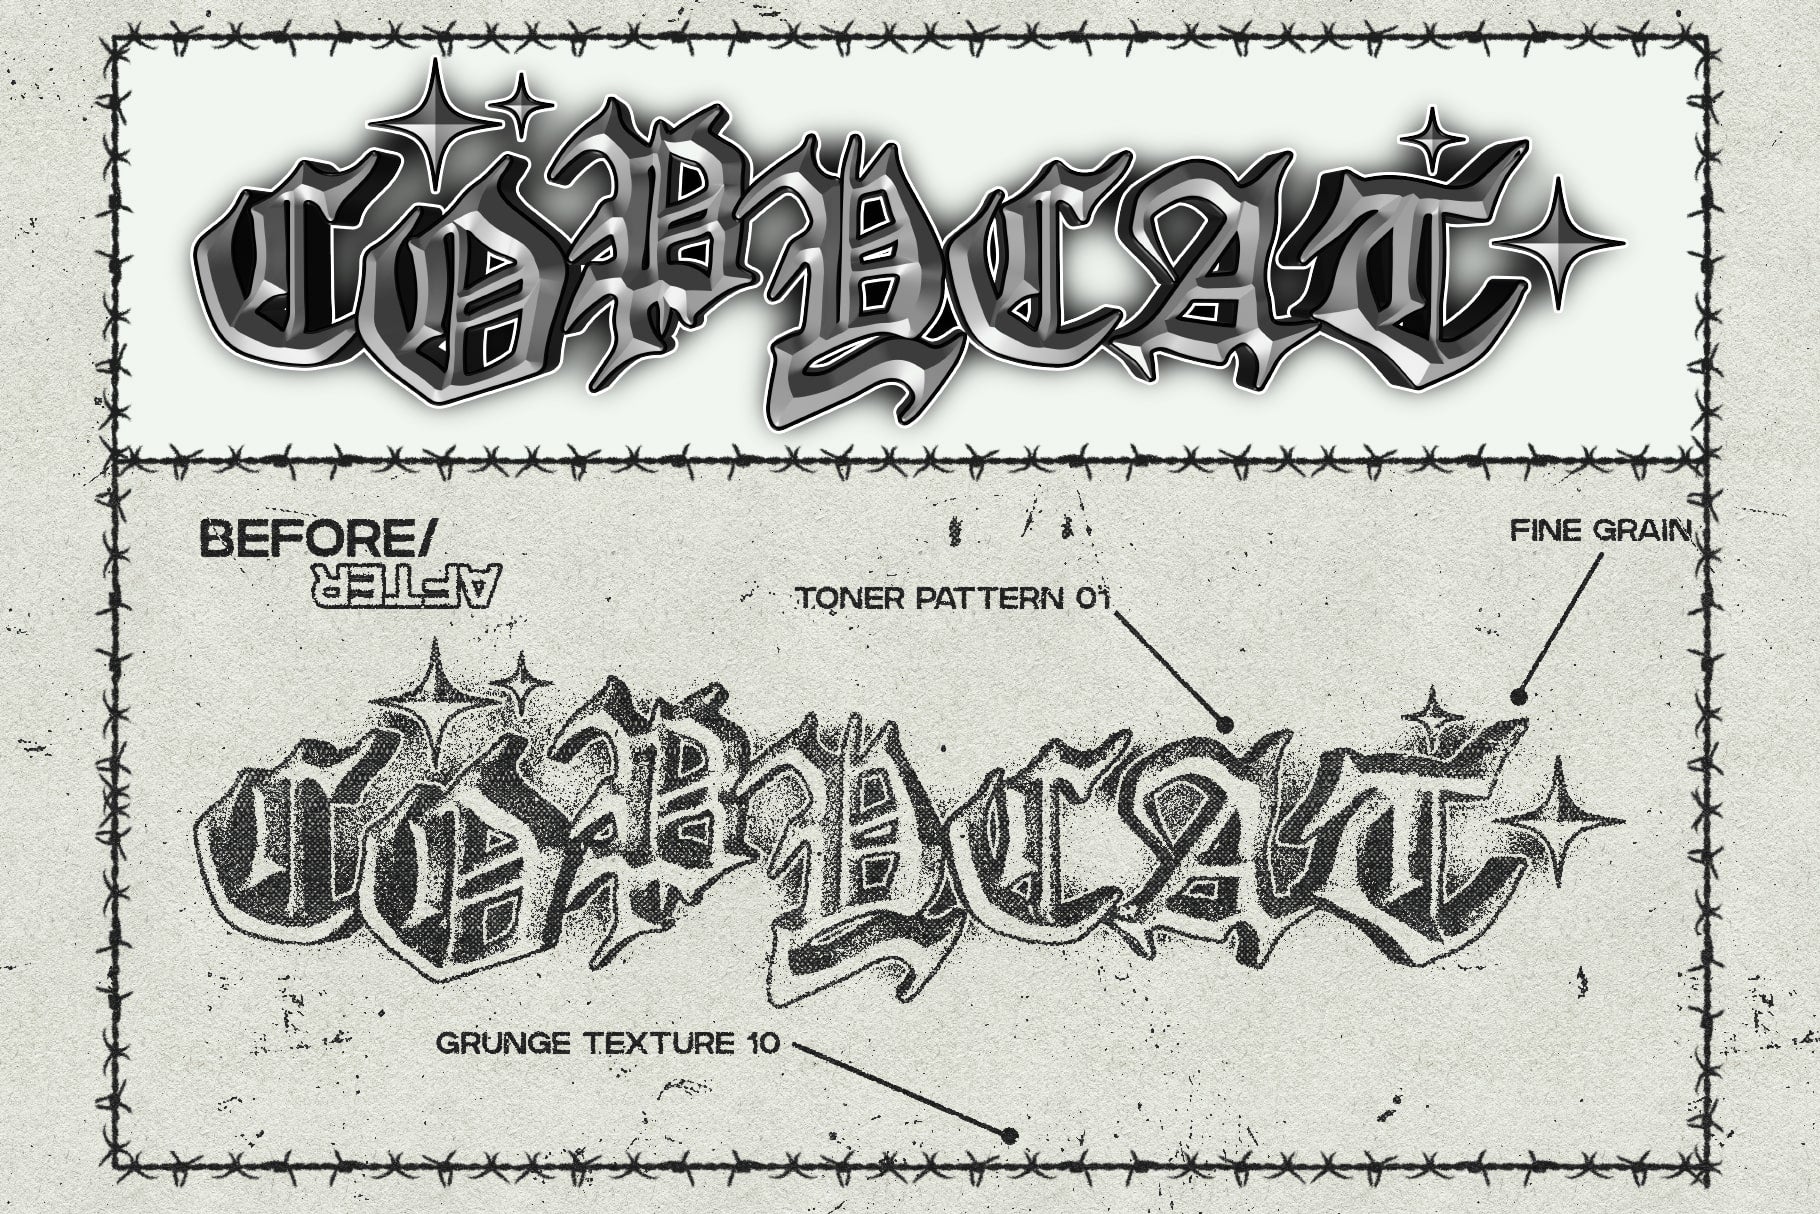 CopyCat - Photocopy Effect